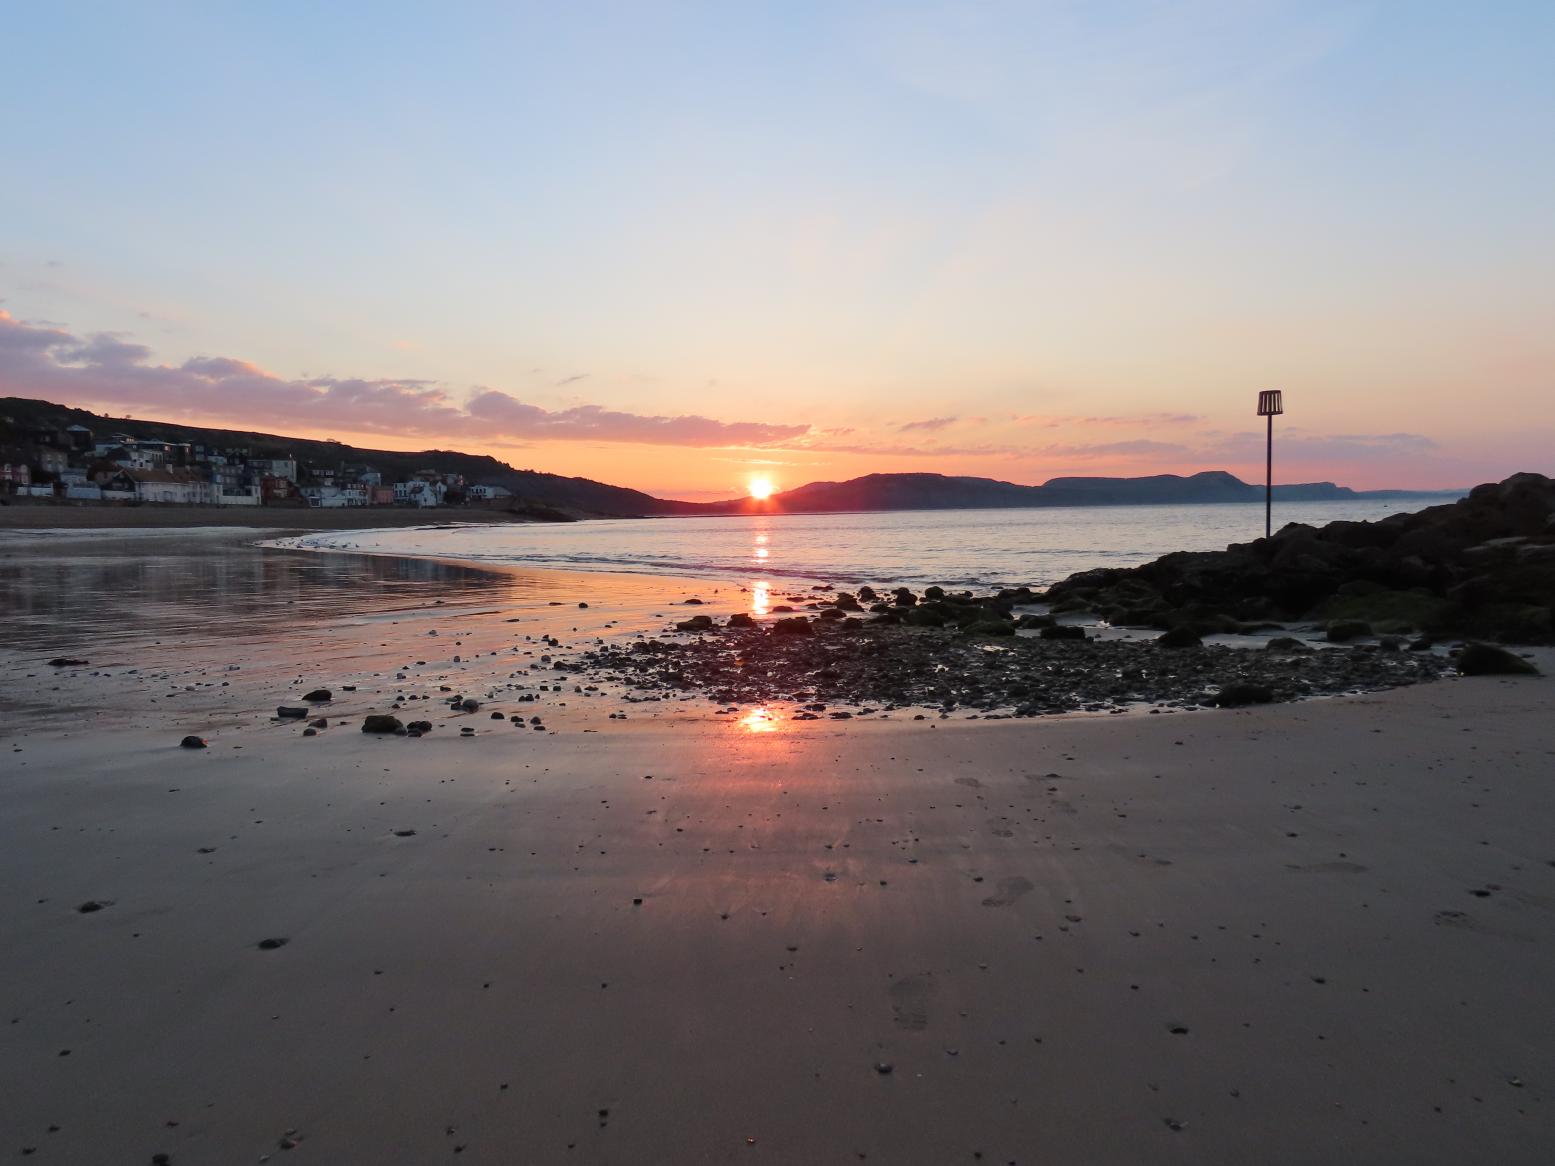 Sunrise viewed from sandy beach Lyme Regis